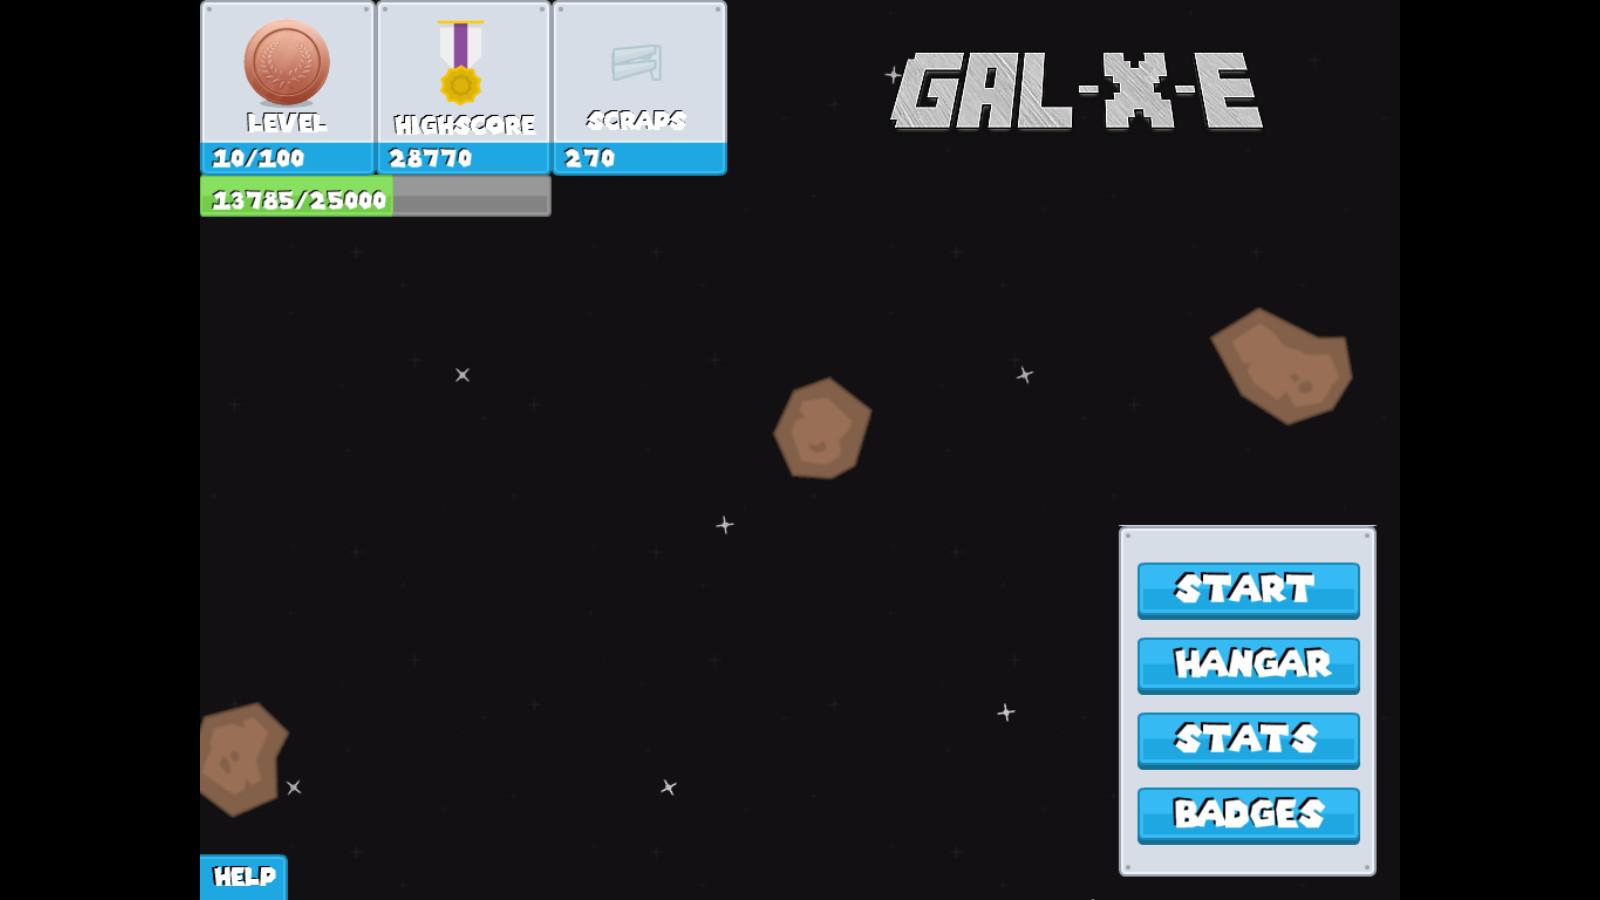 Screenshot №4 from game Gal-X-E